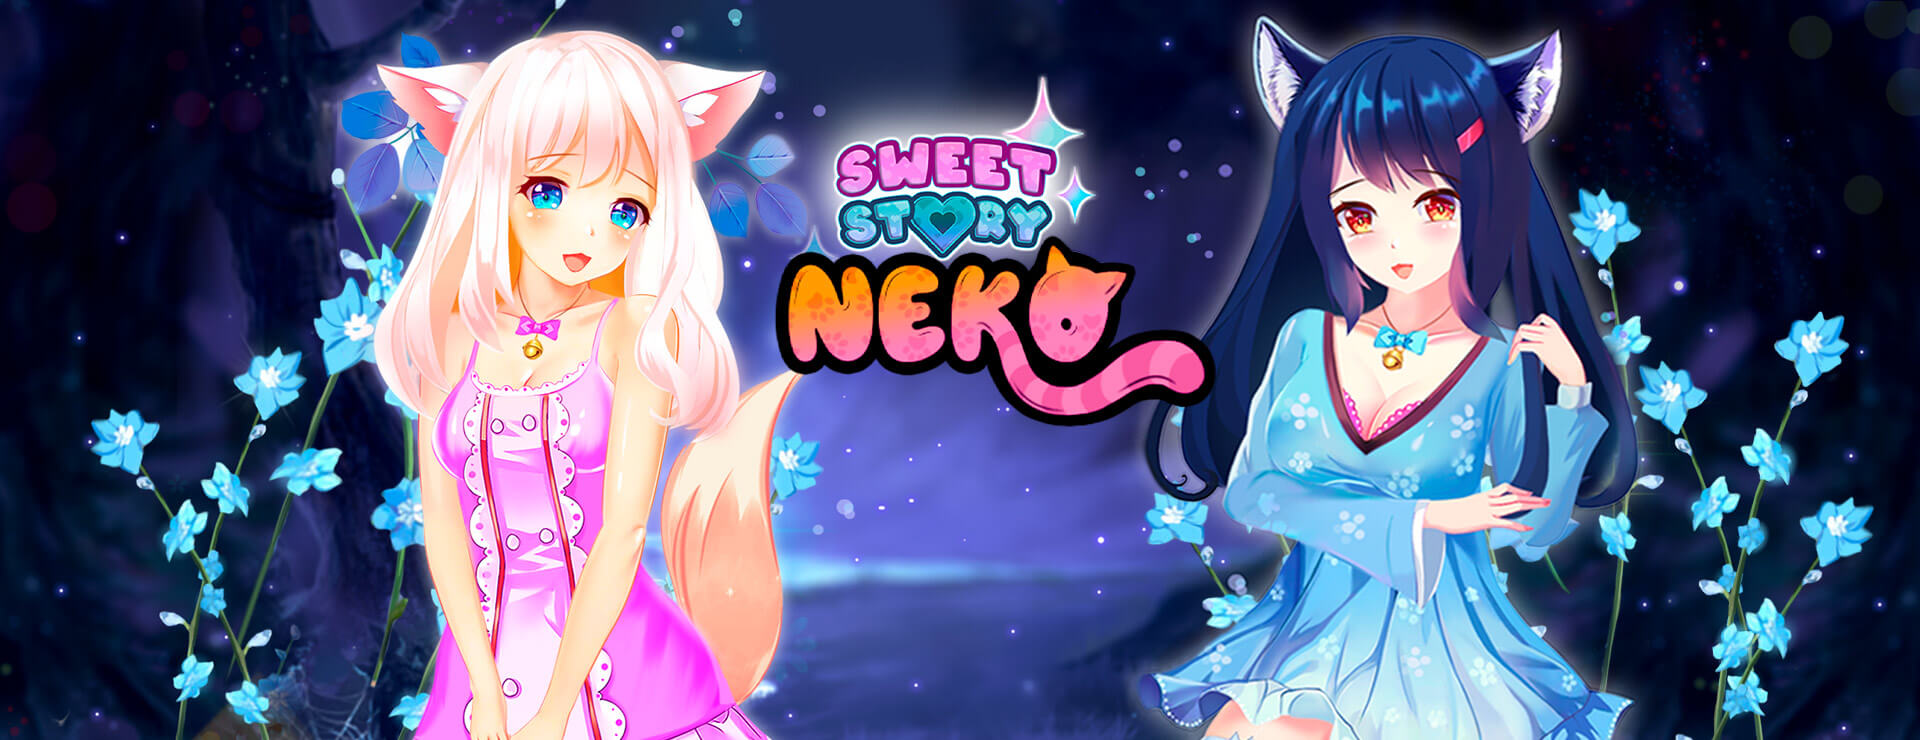 Sweet Story Neko - Casual Jeu